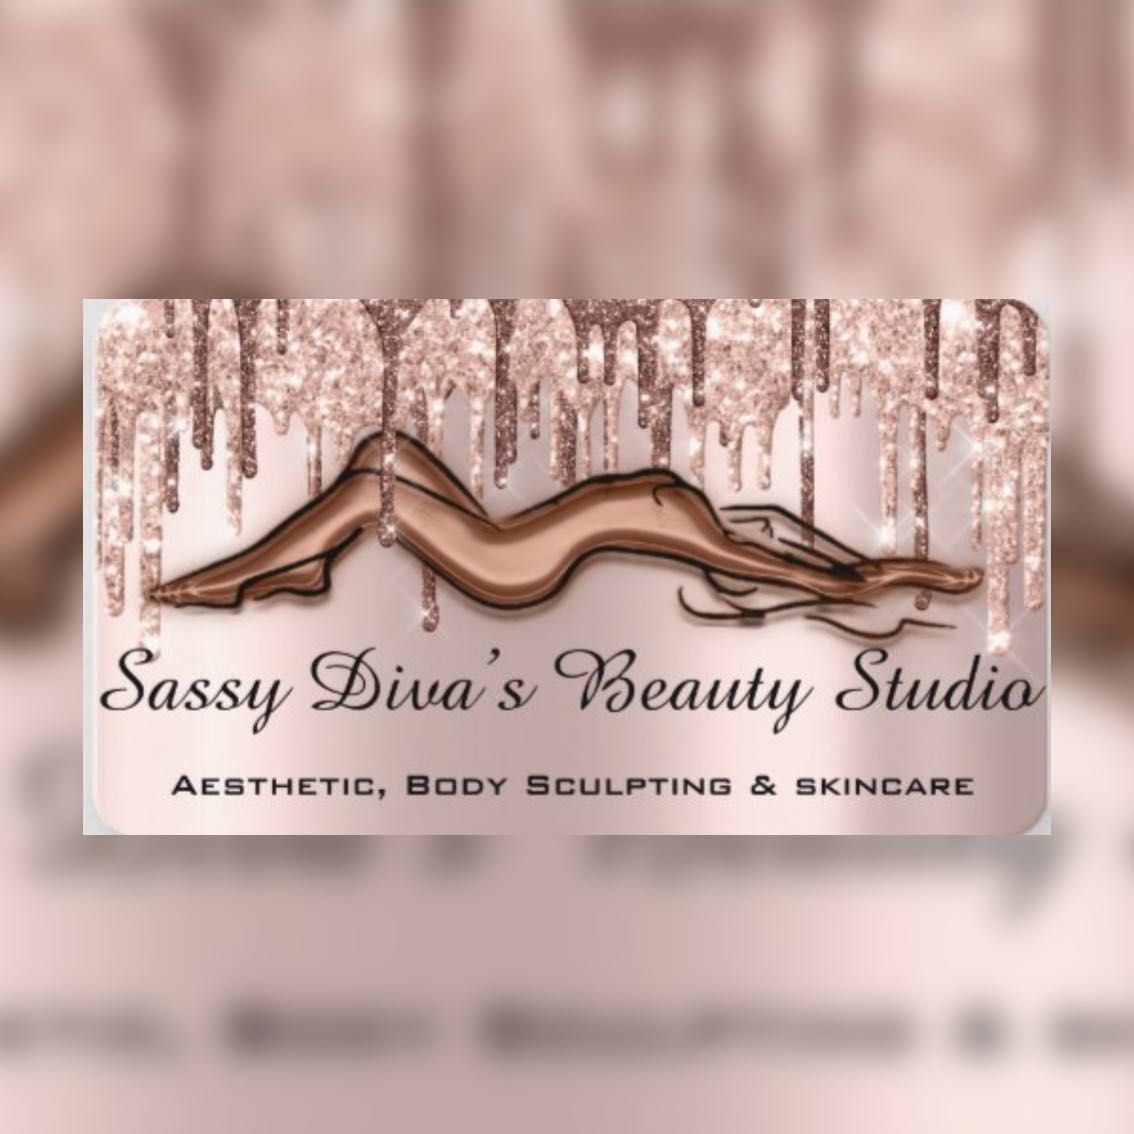 Sassy Diva’s Beauty Studio, 1101 Hamilton St, suite 203, Allentown, 18101